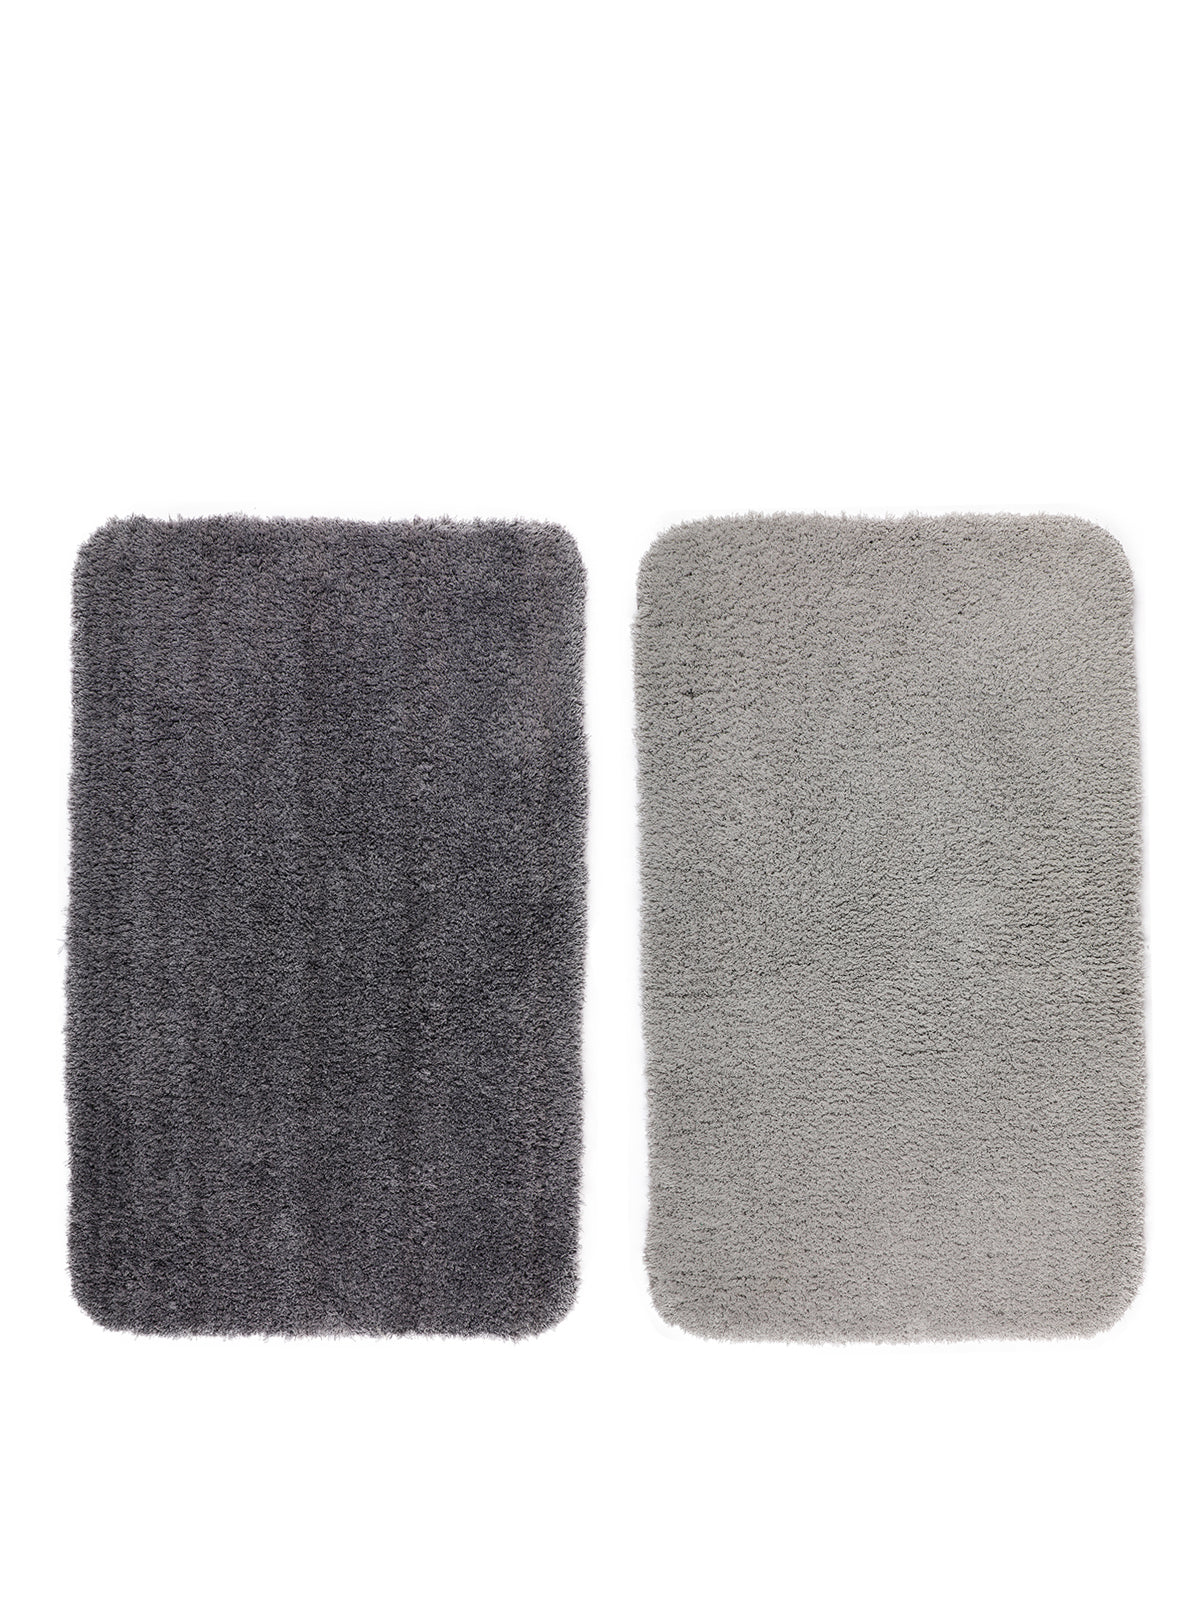 Silver & Grey Set of 2 Solid Patterned Microfiber Bathmat